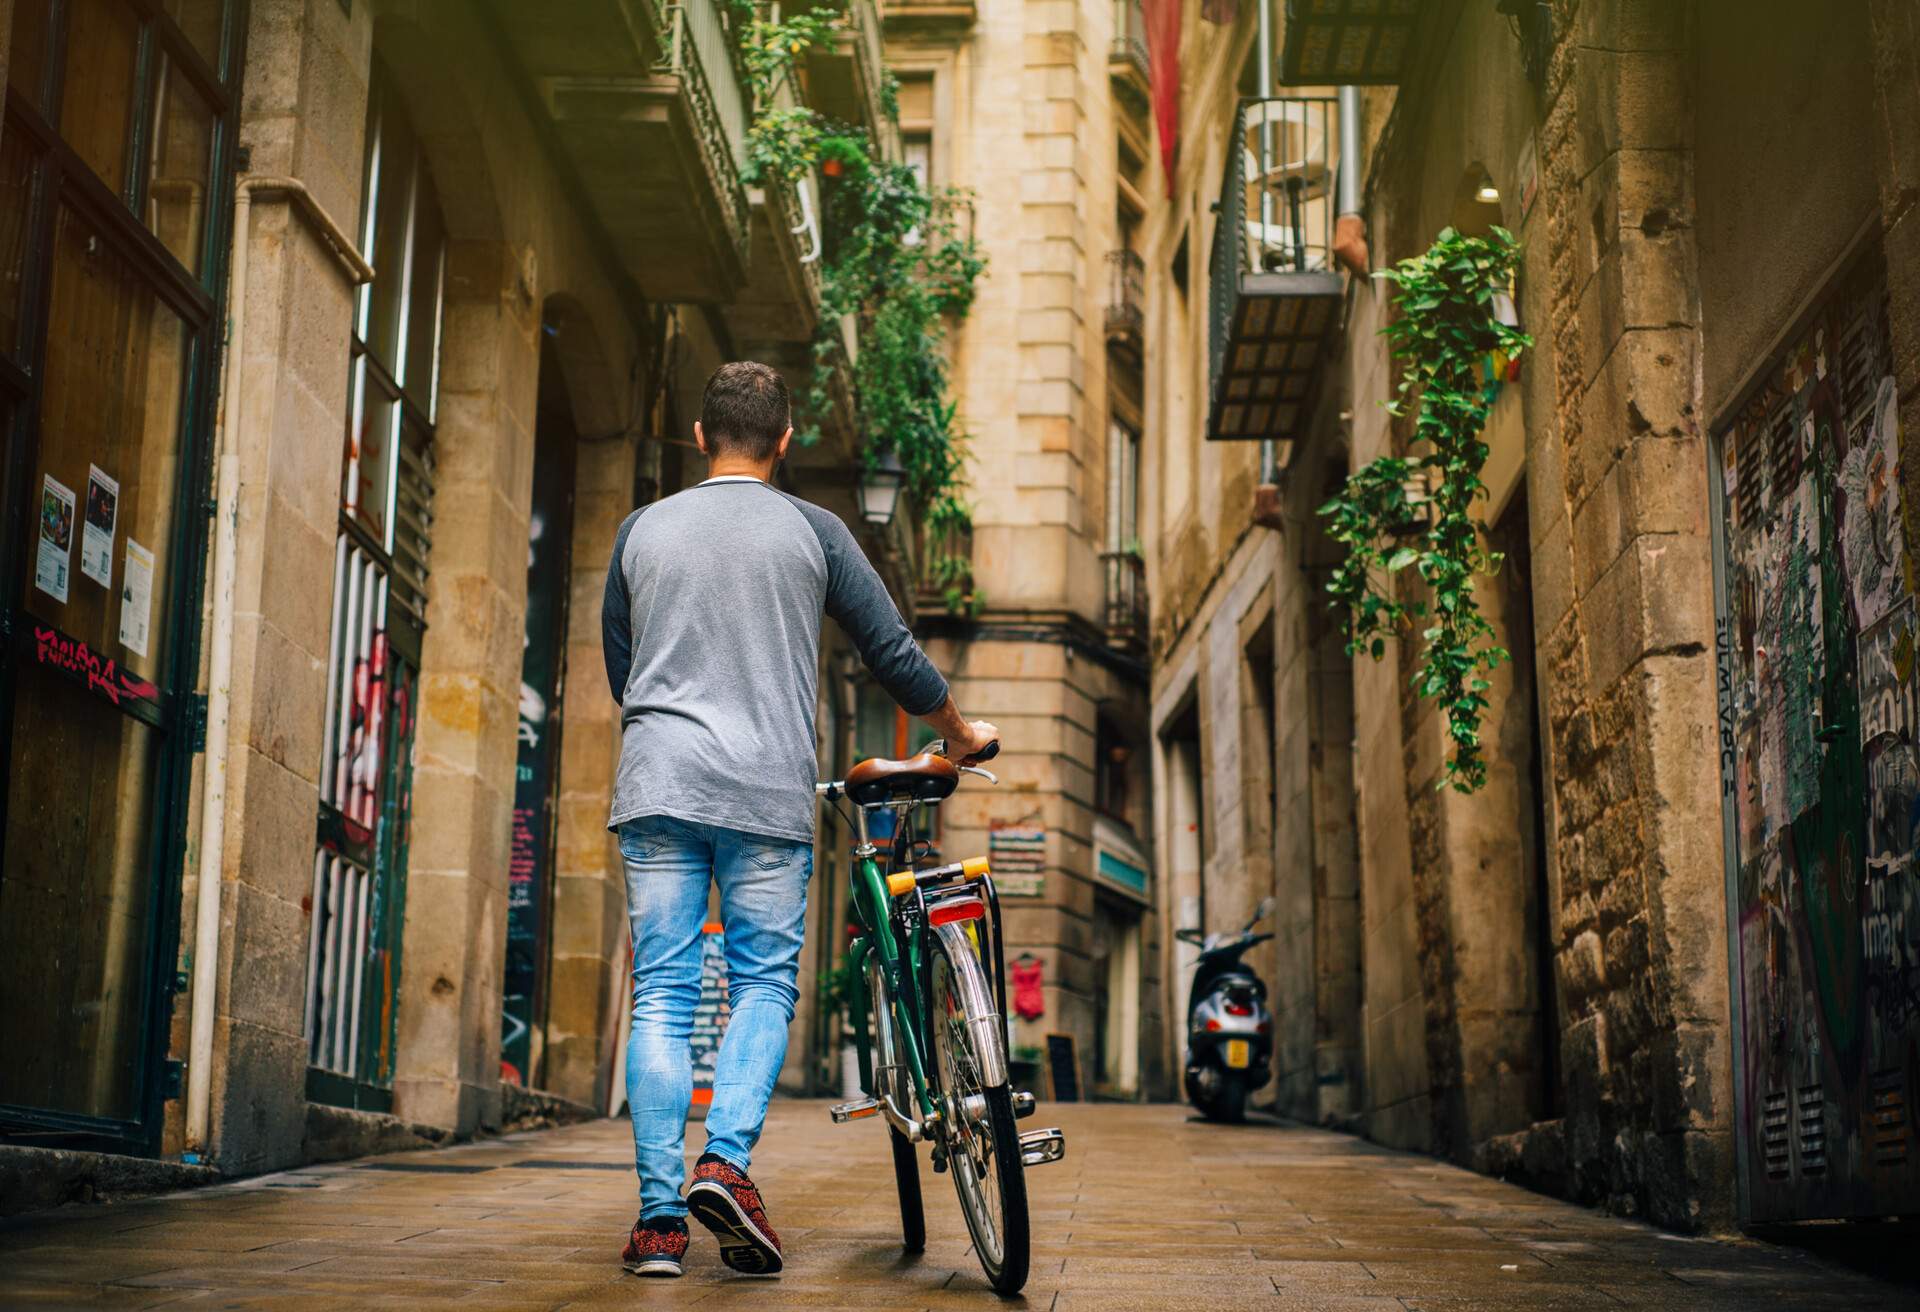 A man walking his bike along an alley between old buildings.